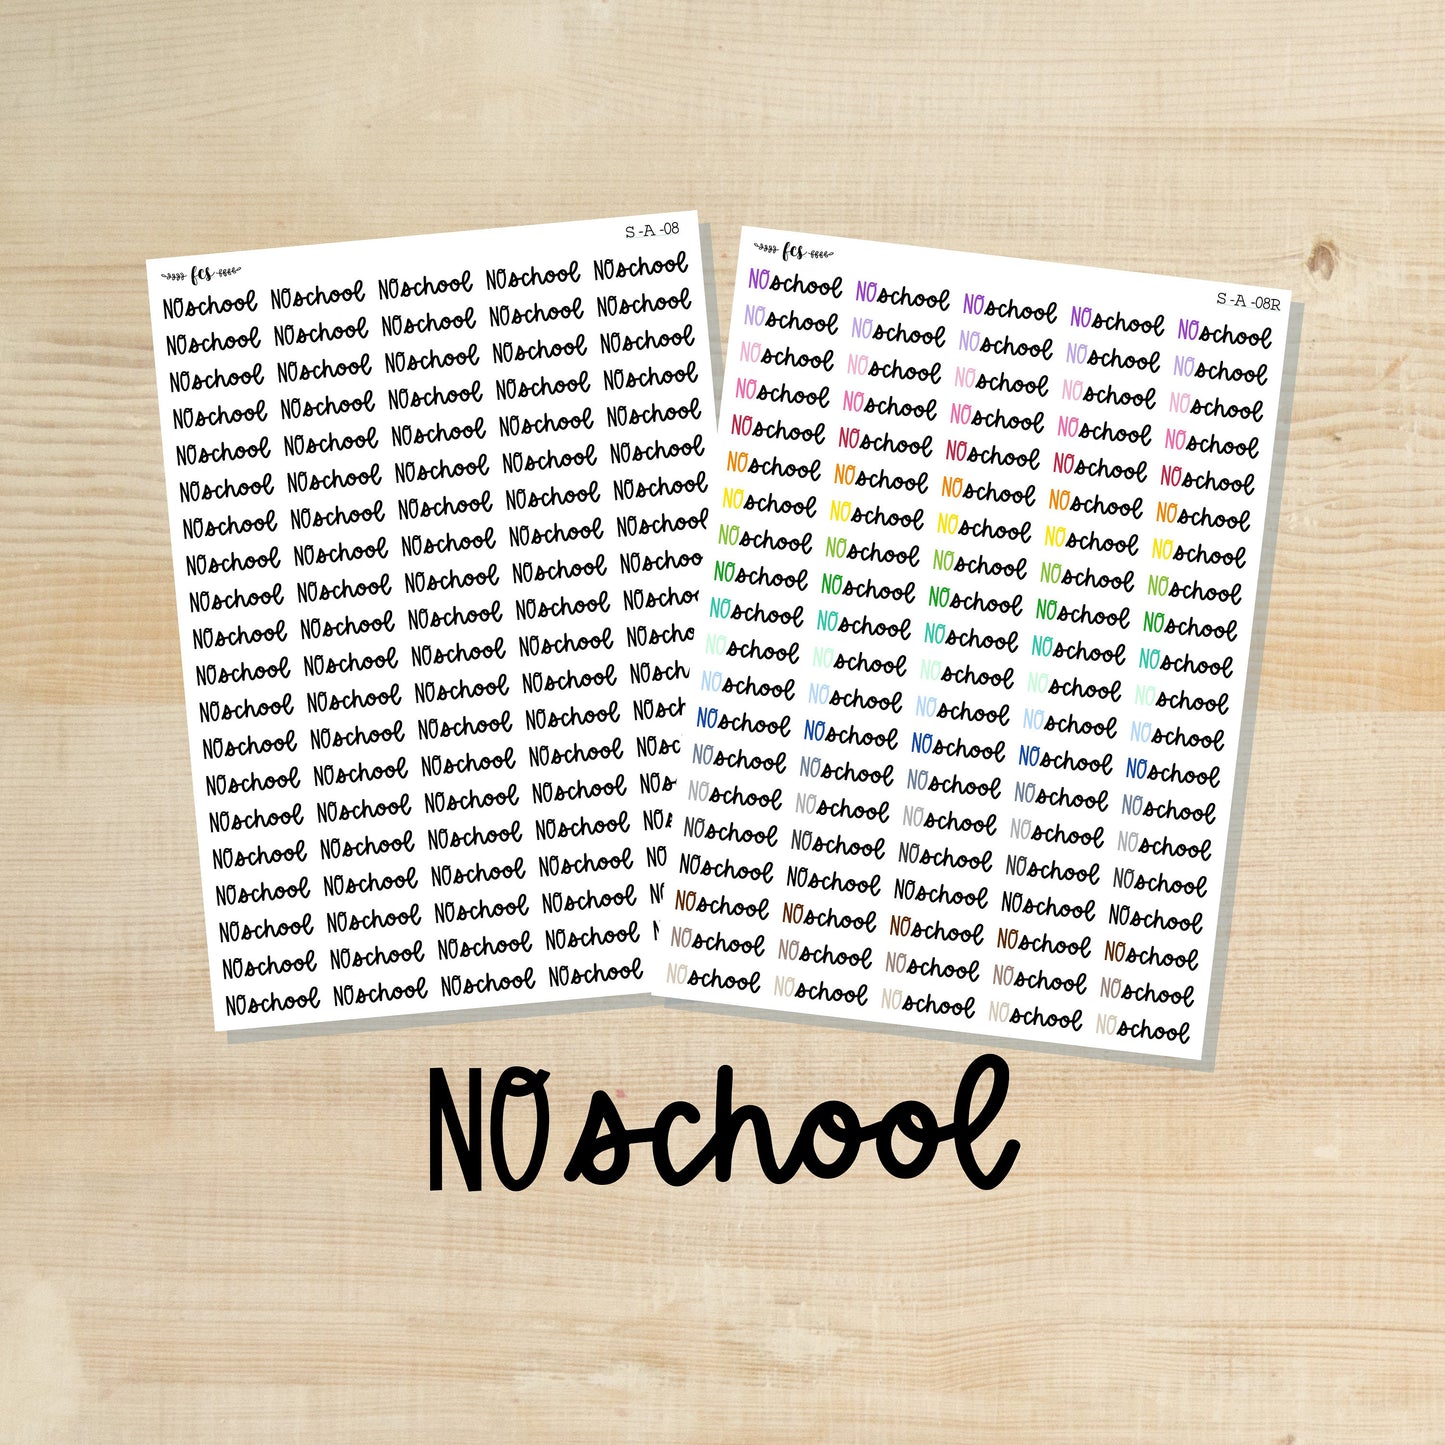 S-A-08 || NO SCHOOL script stickers